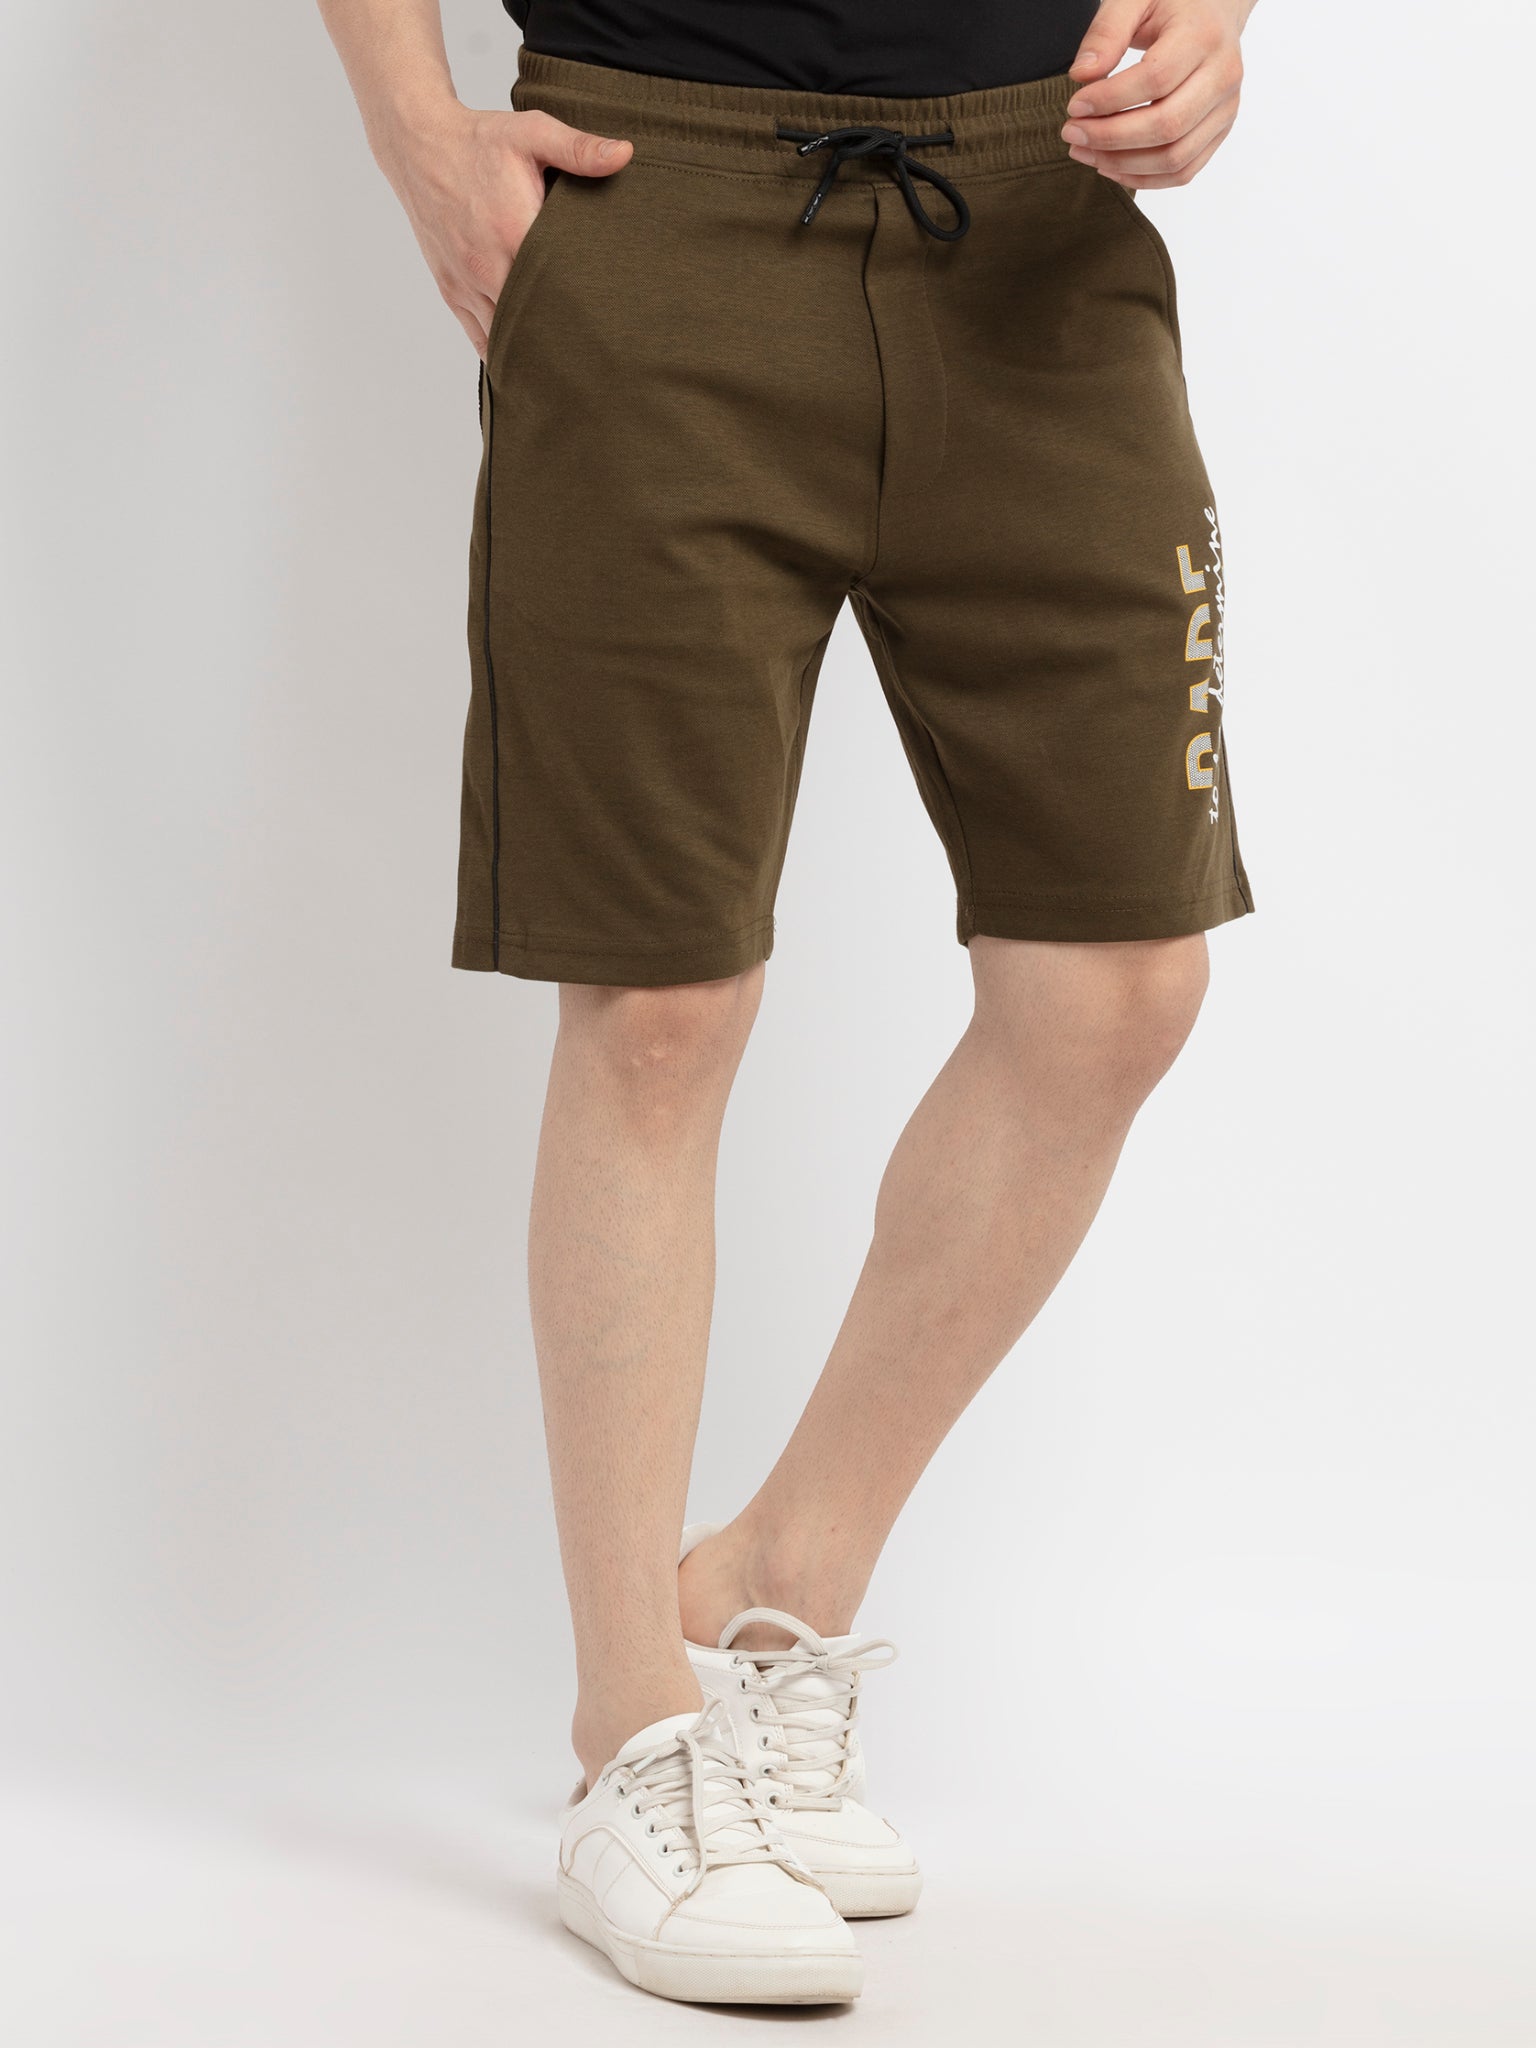 Status Quo |Men's Printed Shorts - S, M, L, XL, XXL